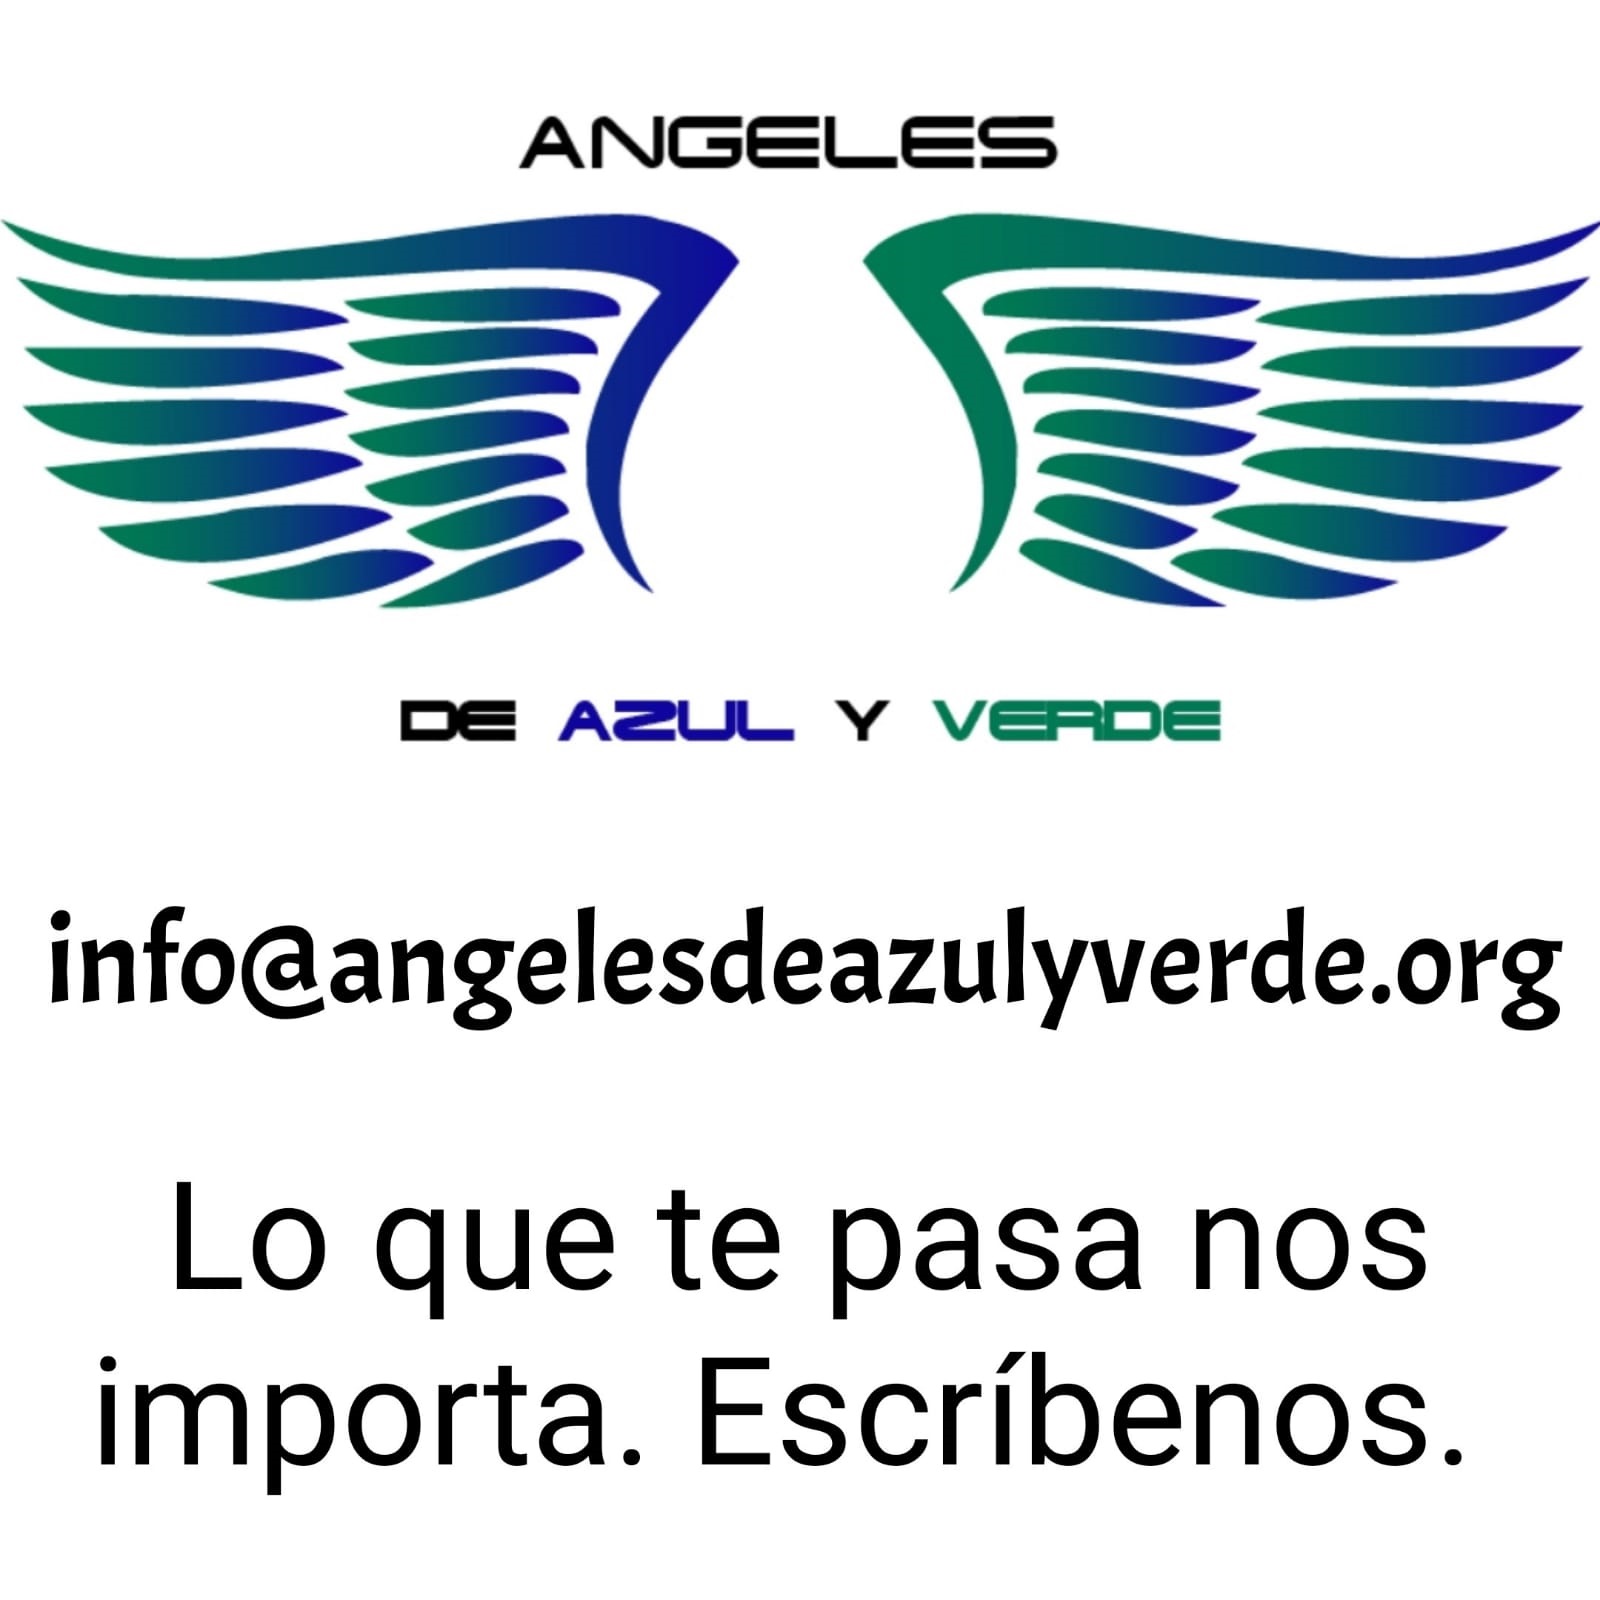 ANGELES DE AZUL Y VERDE